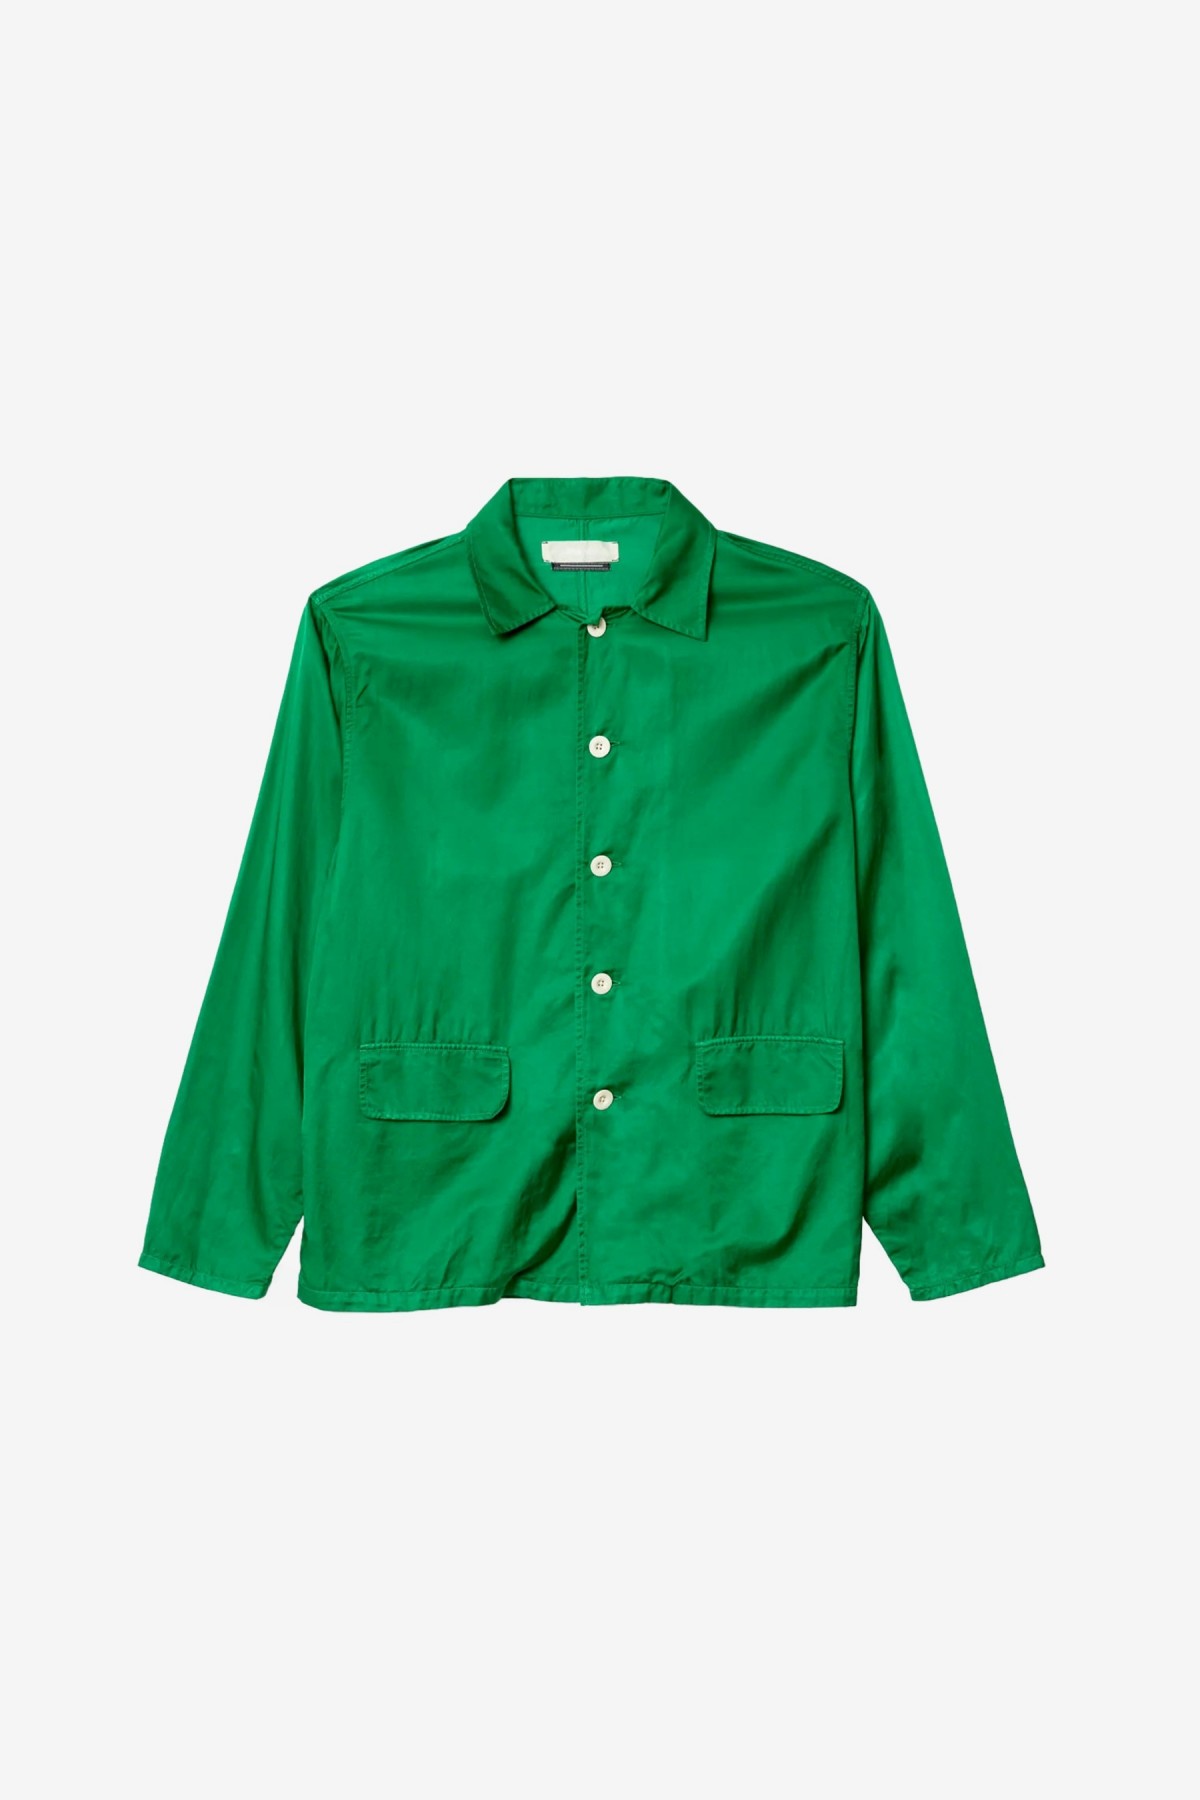 Adnym Blade Shirt in Green